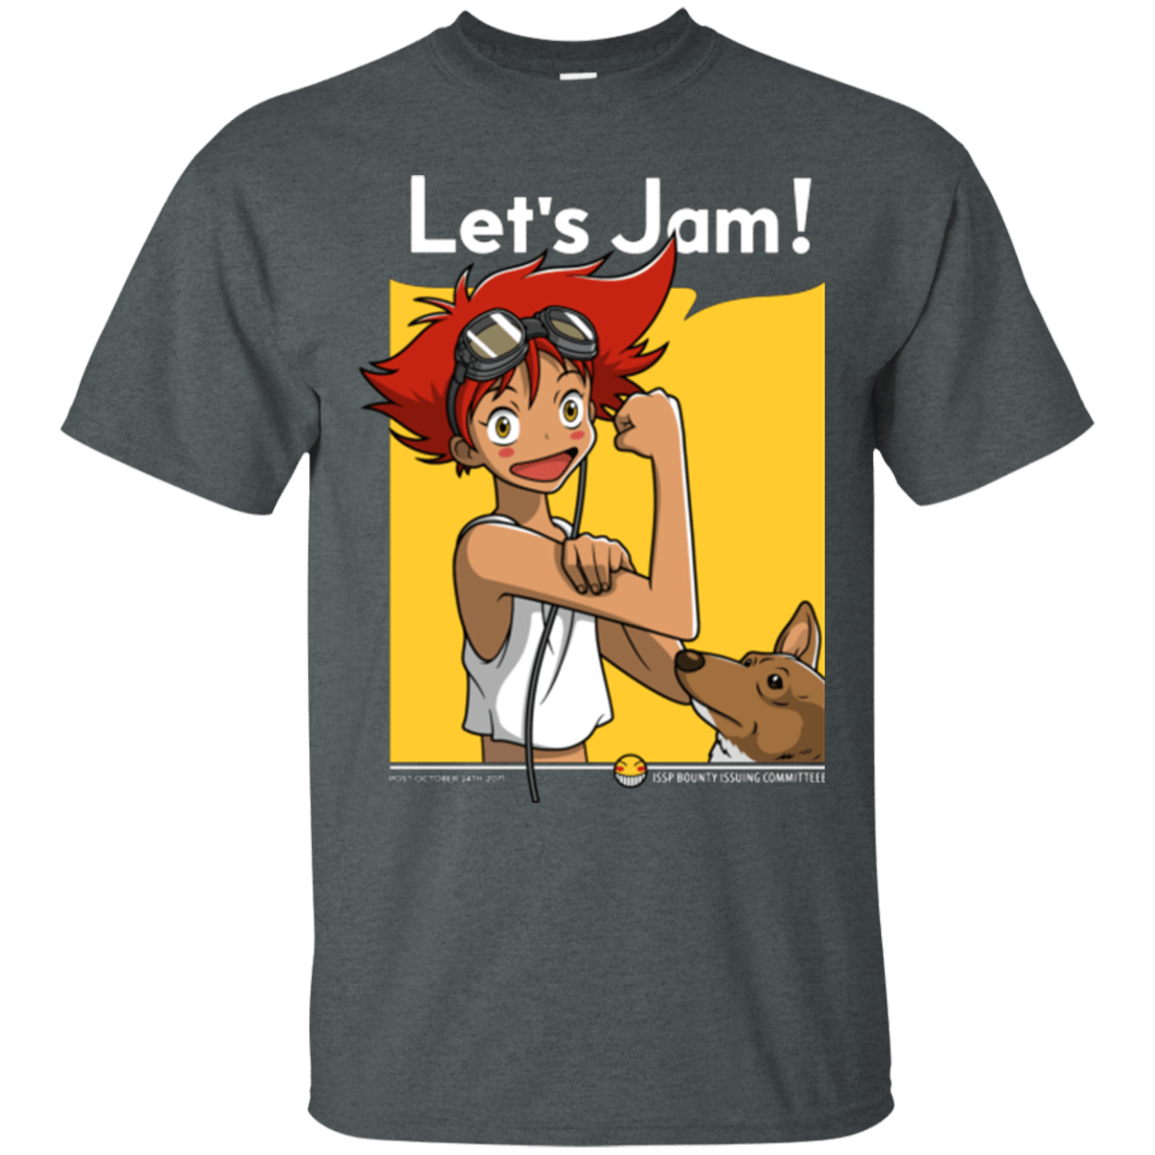 T-Shirts Dark Heather / Small JAMMING WITH EDWARD T-Shirt